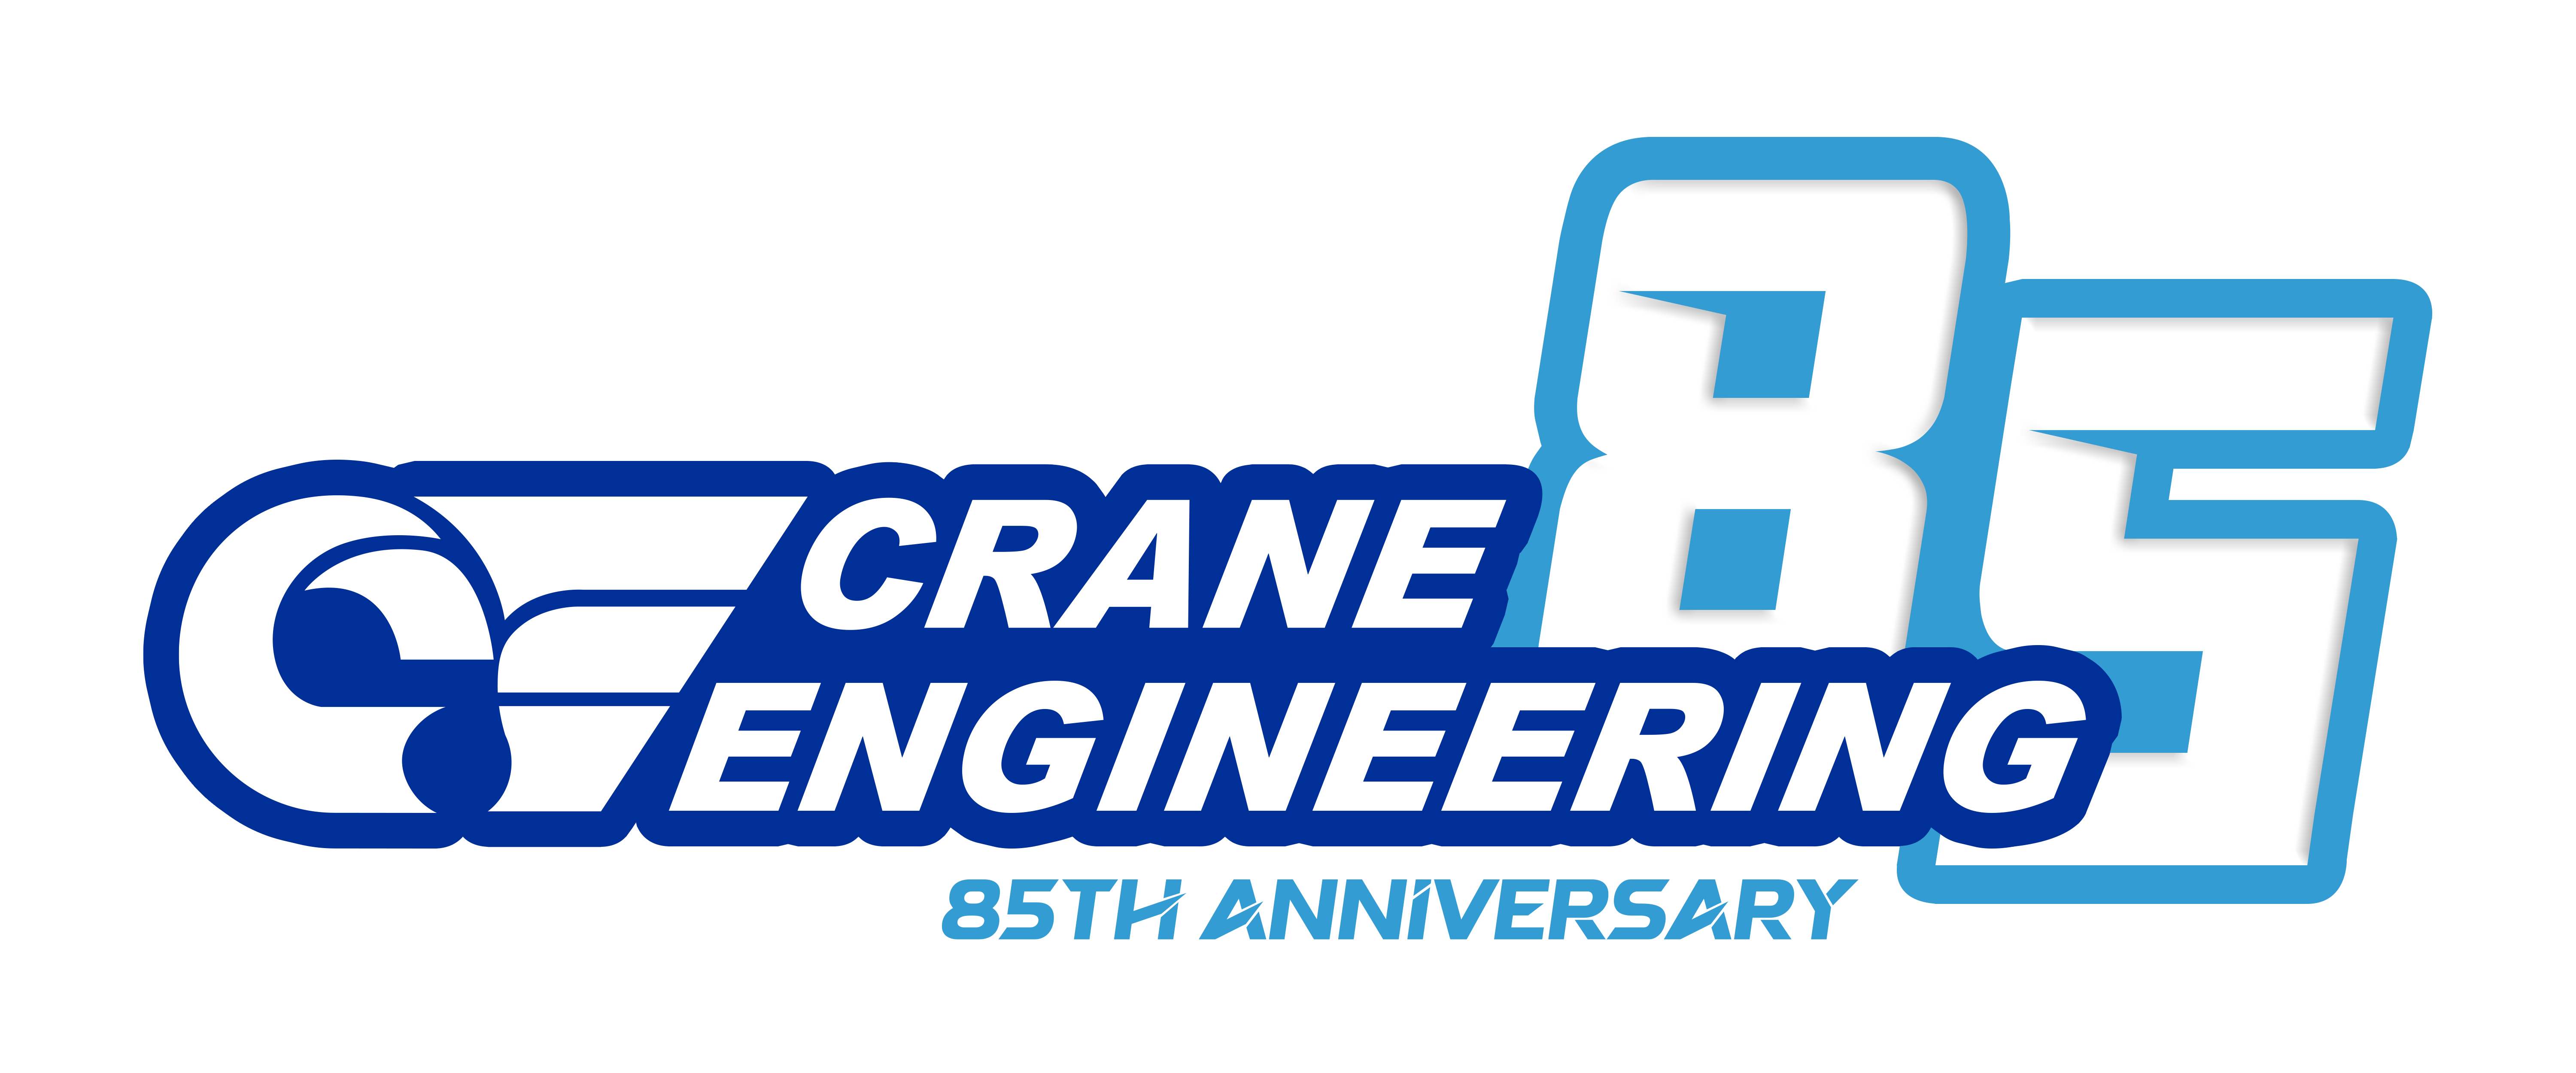 Crane Engineering 85th anniversary logo